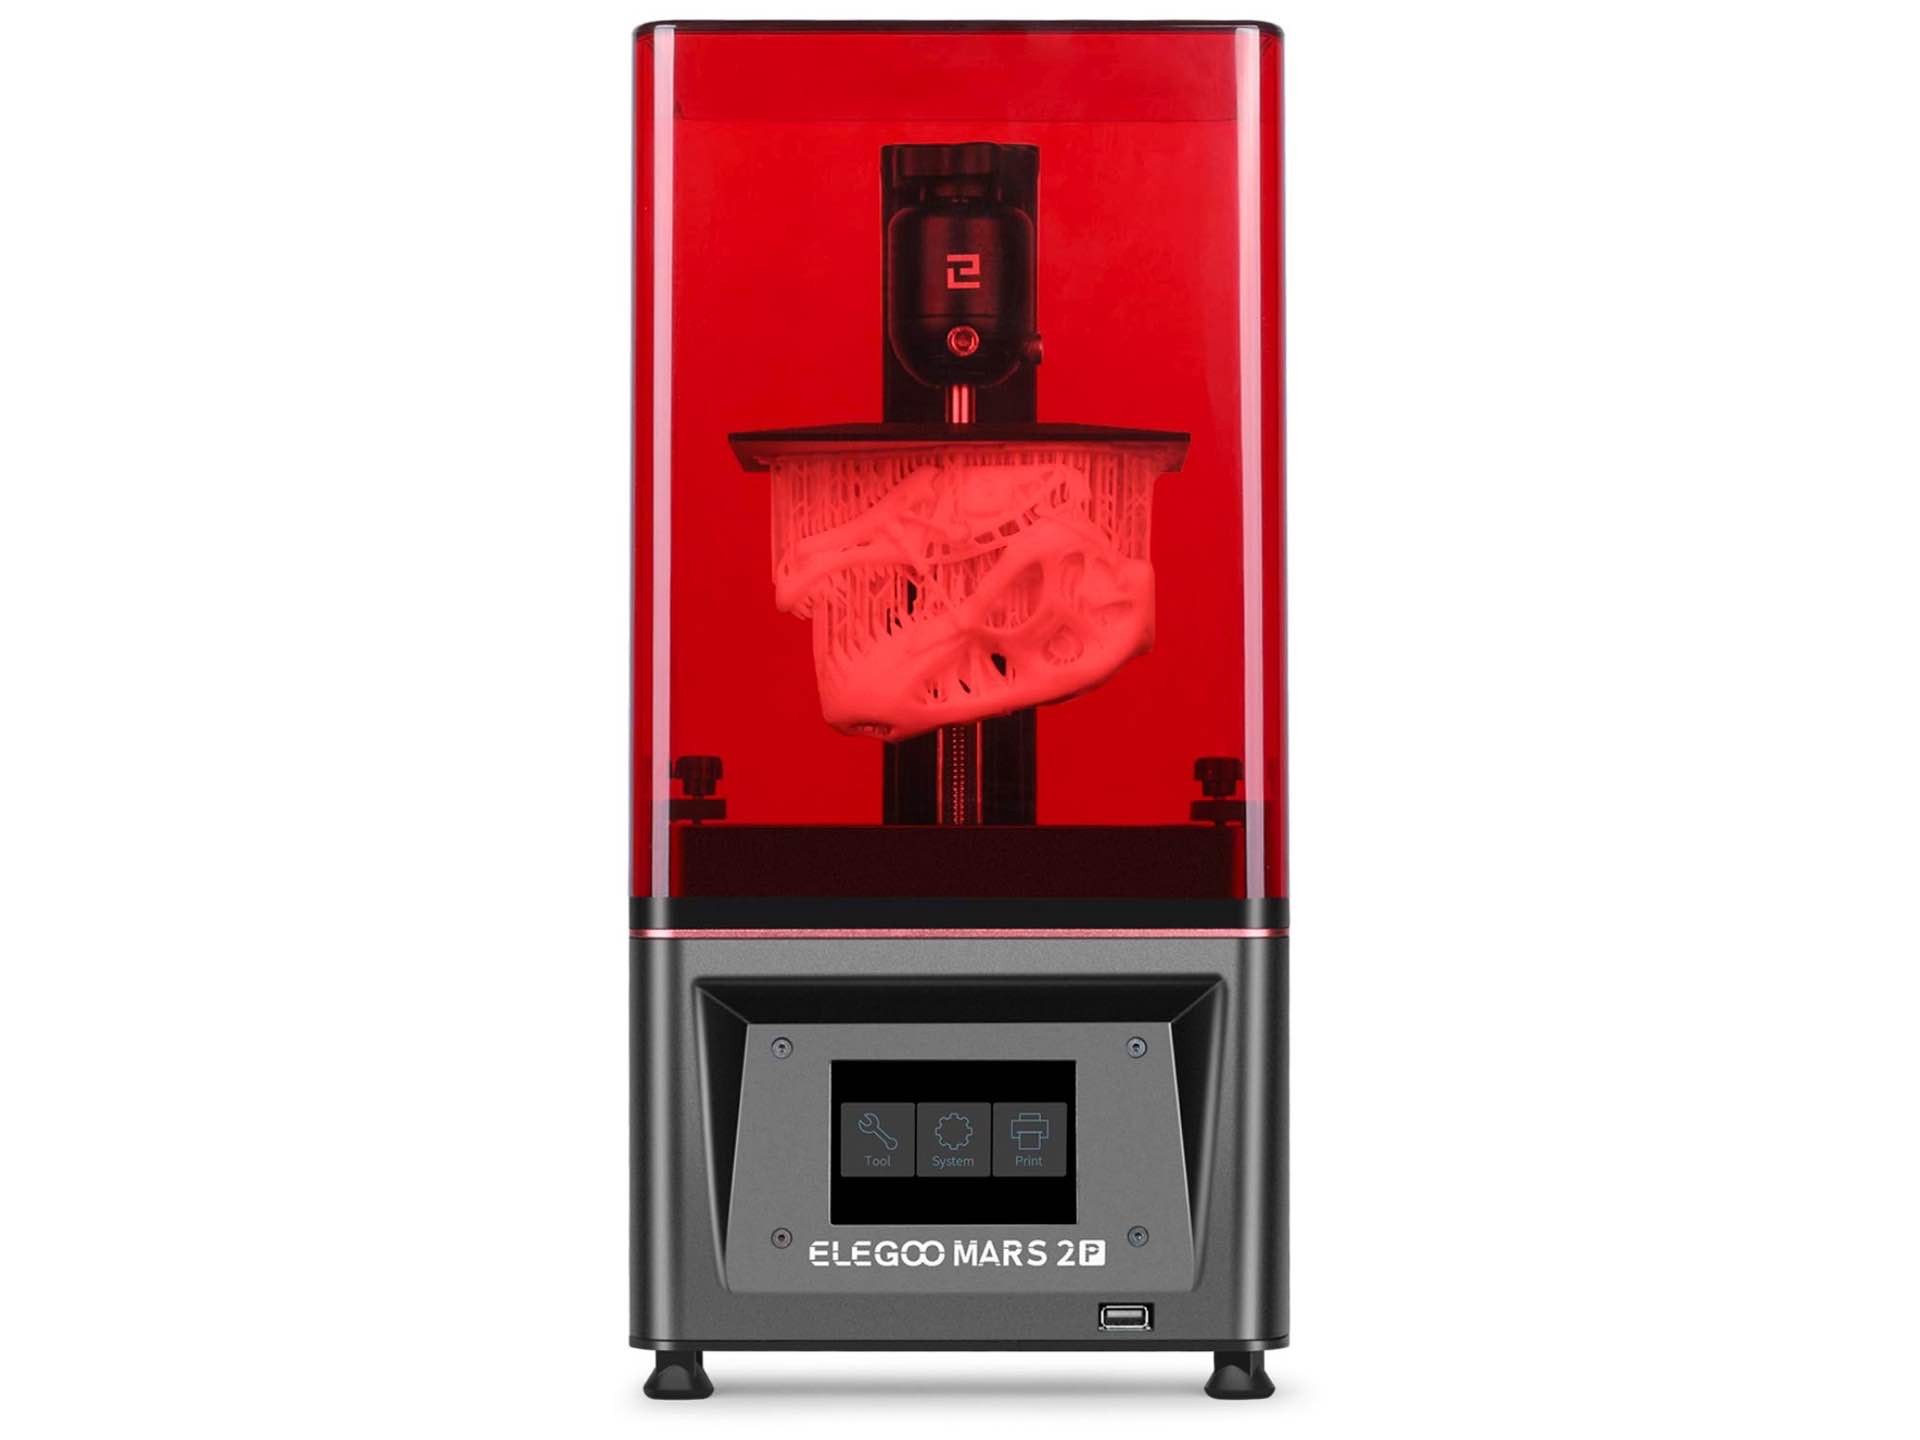 Elegoo Mars 2 Pro 3D printer. ($300)